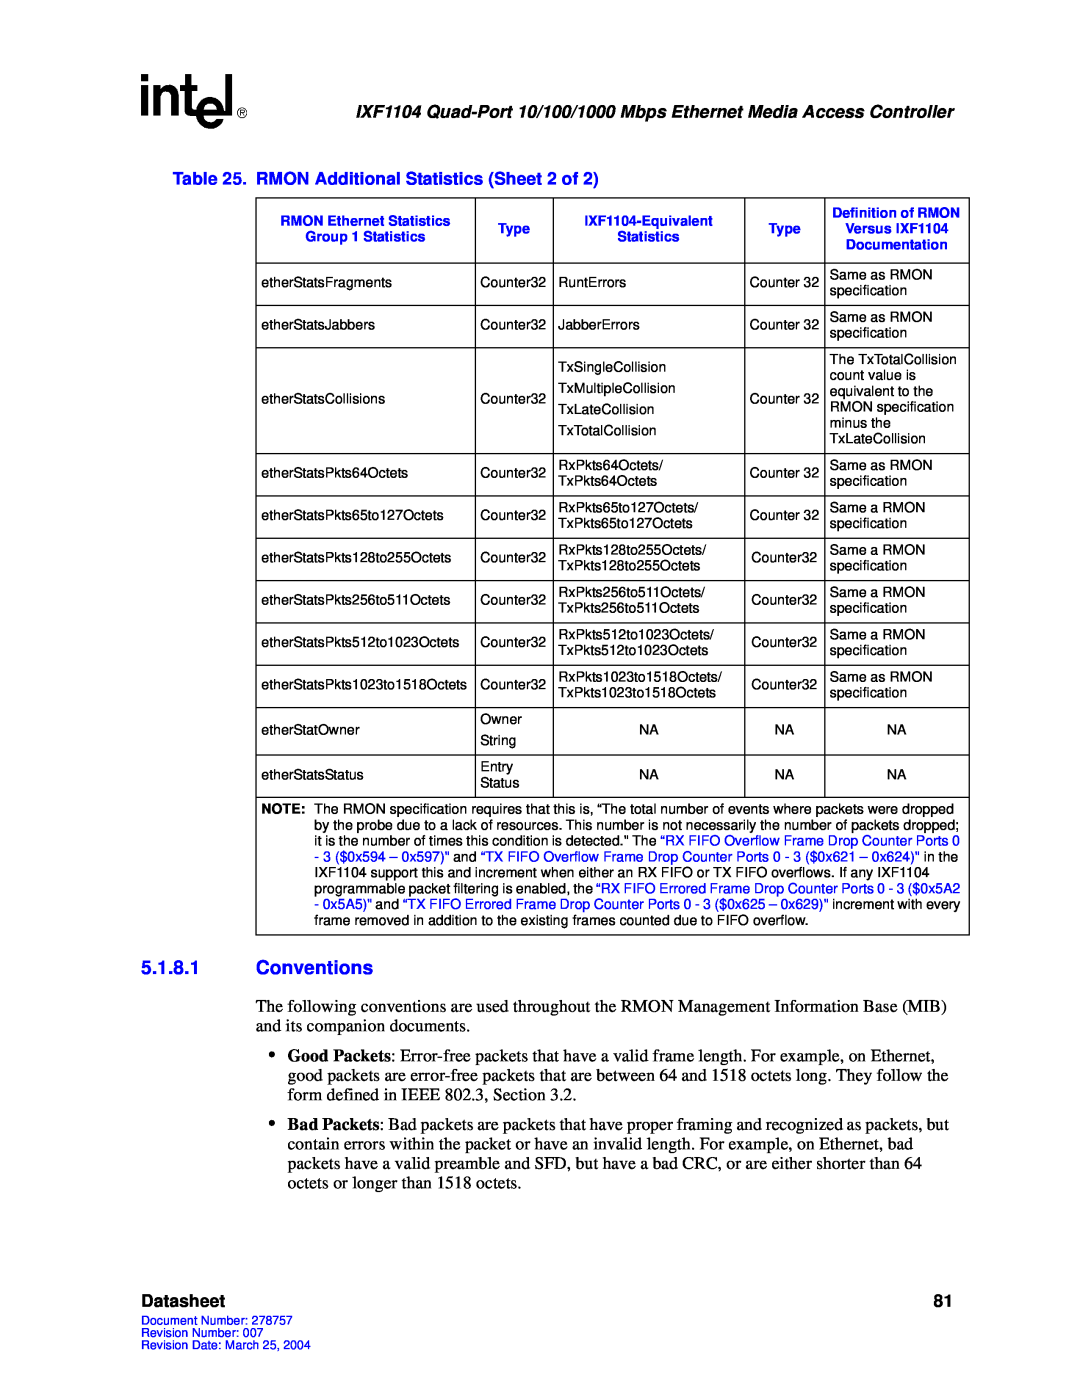 Intel IXF1104 manual 5.1.8.1Conventions, Datasheet 